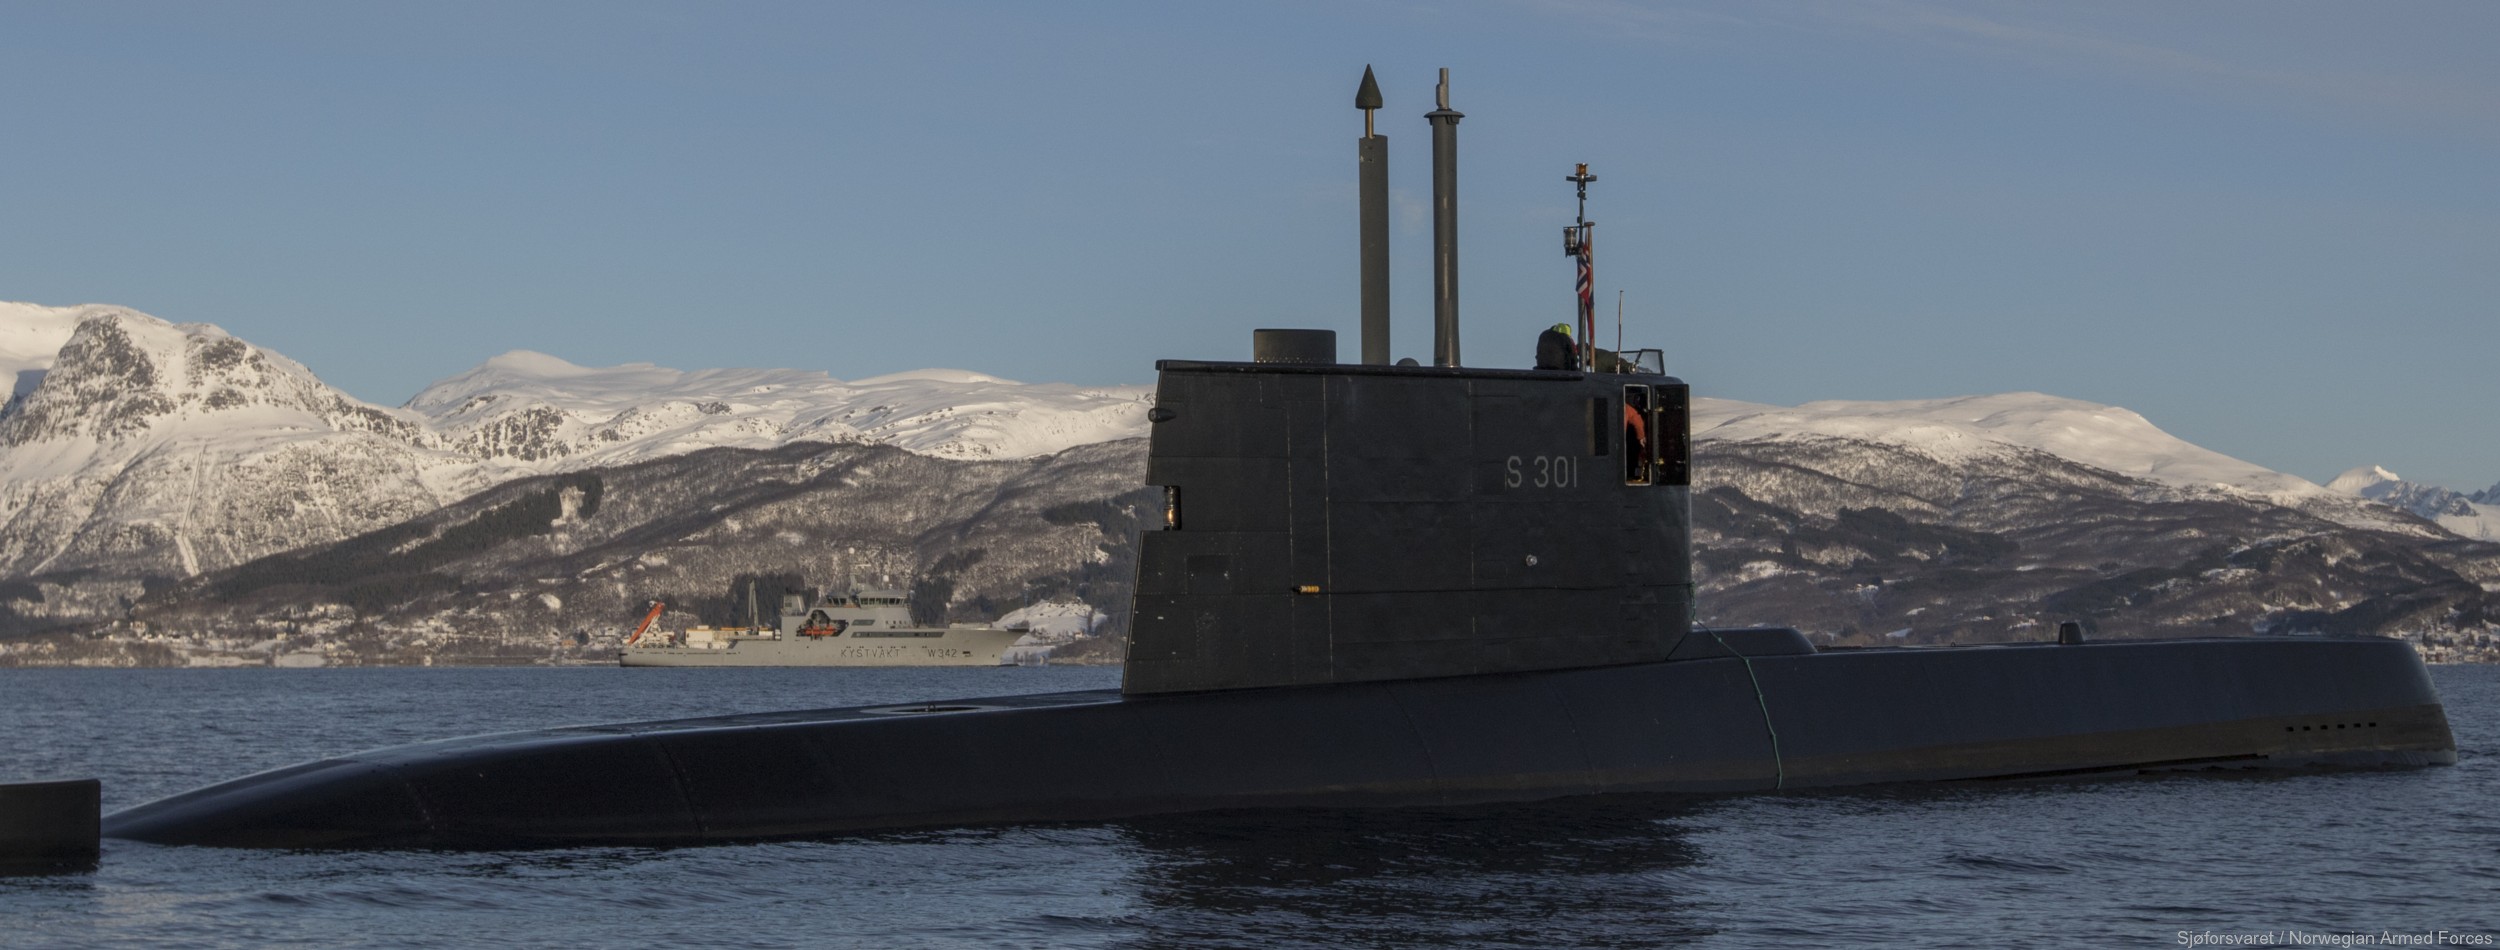 s-301 hnoms knm utsira ula class submarine type 210 attack ssk undervannsbåt royal norwegian navy sjøforsvaret 12